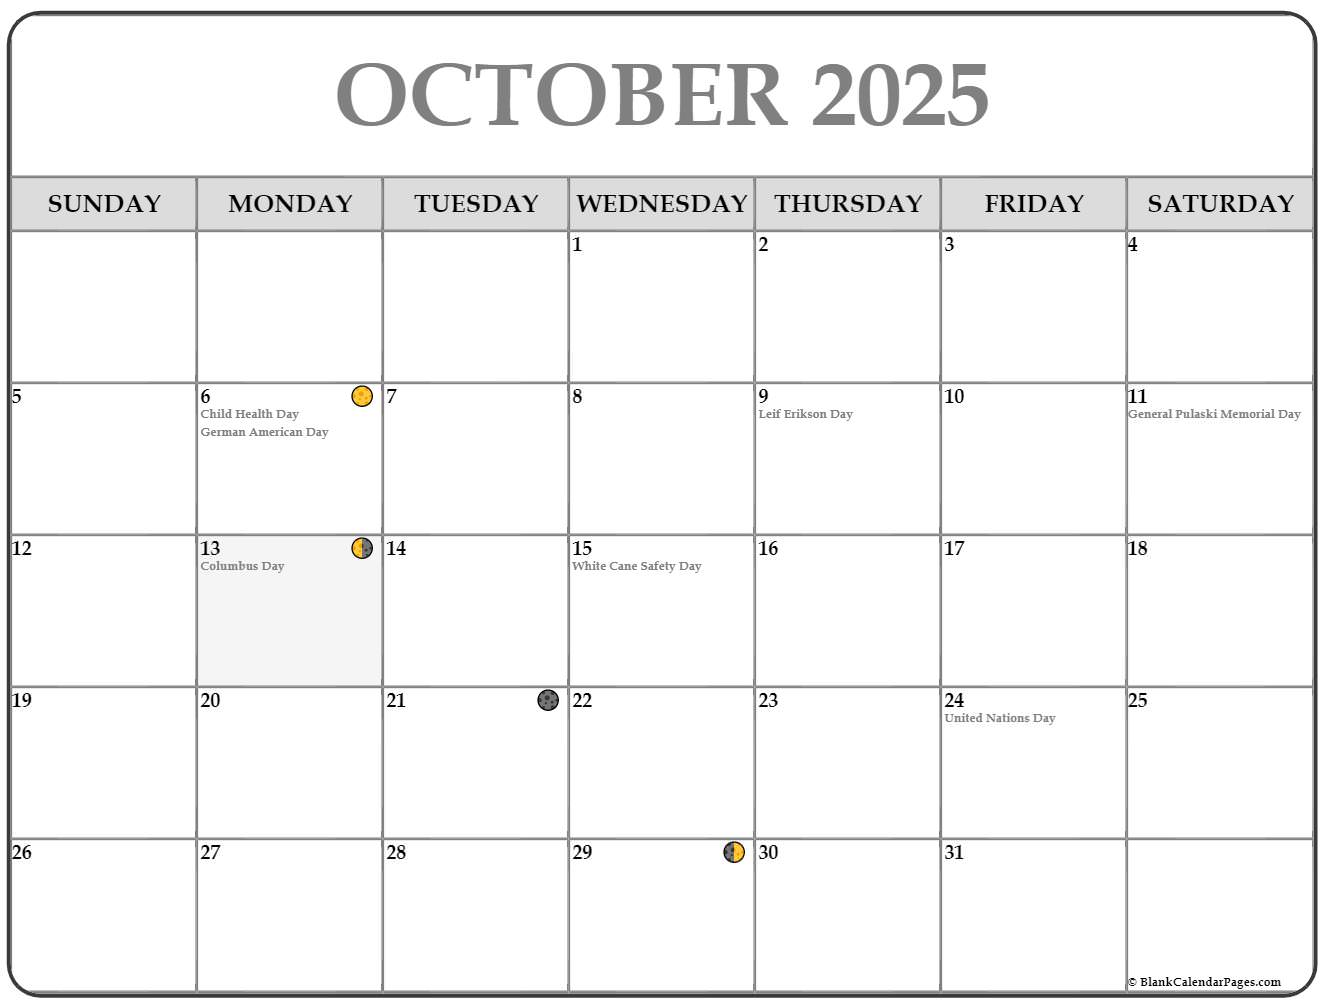 October 2025 Lunar Calendar  Moon Phase Calendar